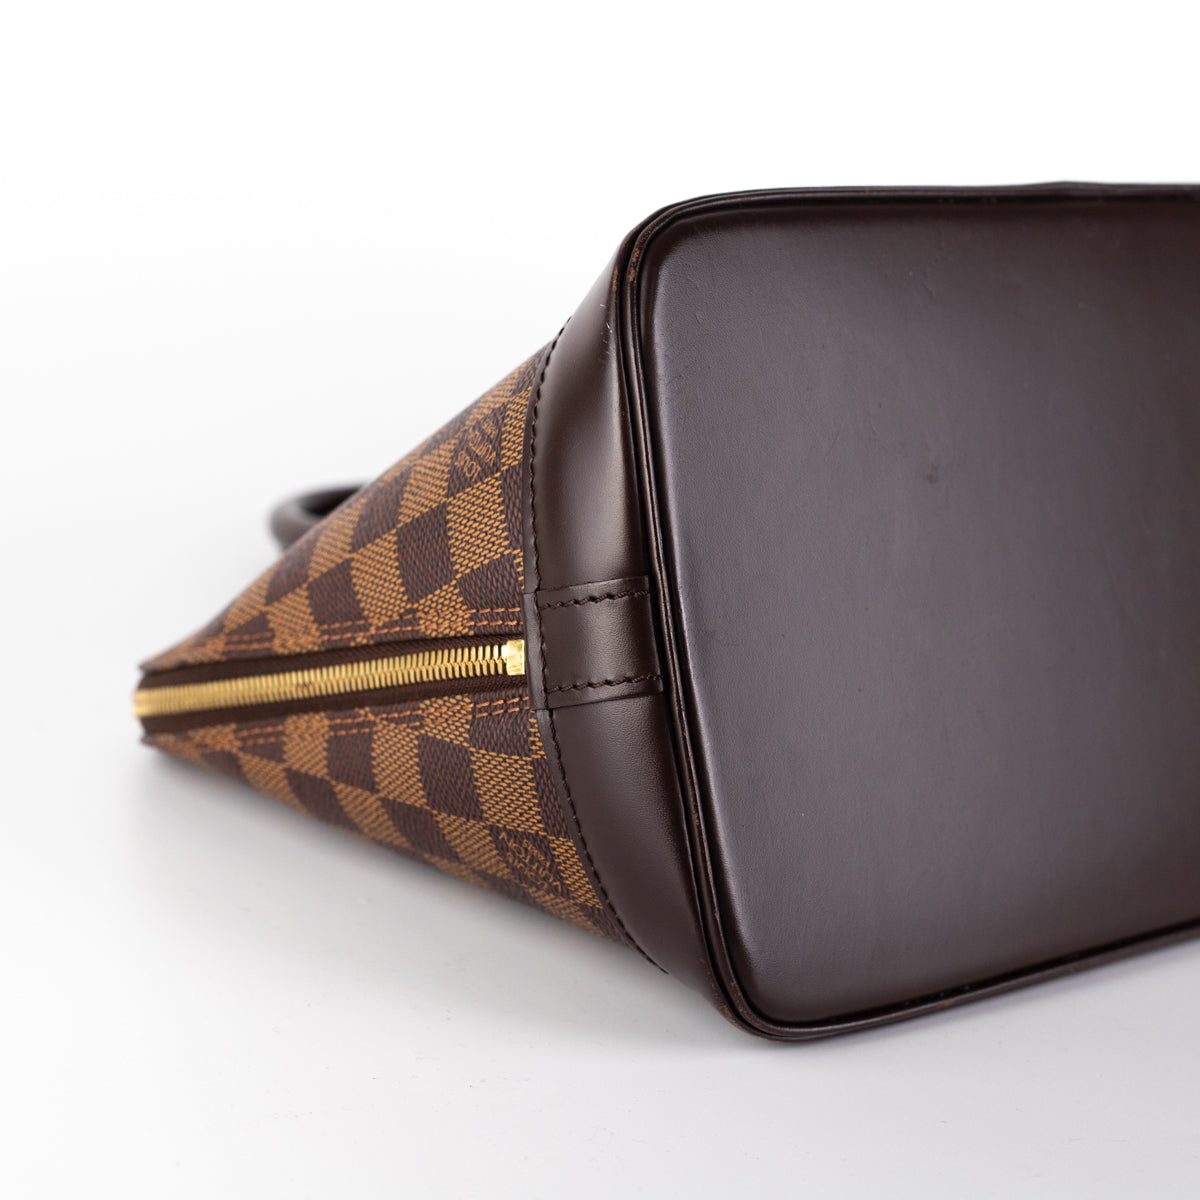 LV Louis Vuitton Alma PM Handbag Damiere Ebene Brown Canvas Bag